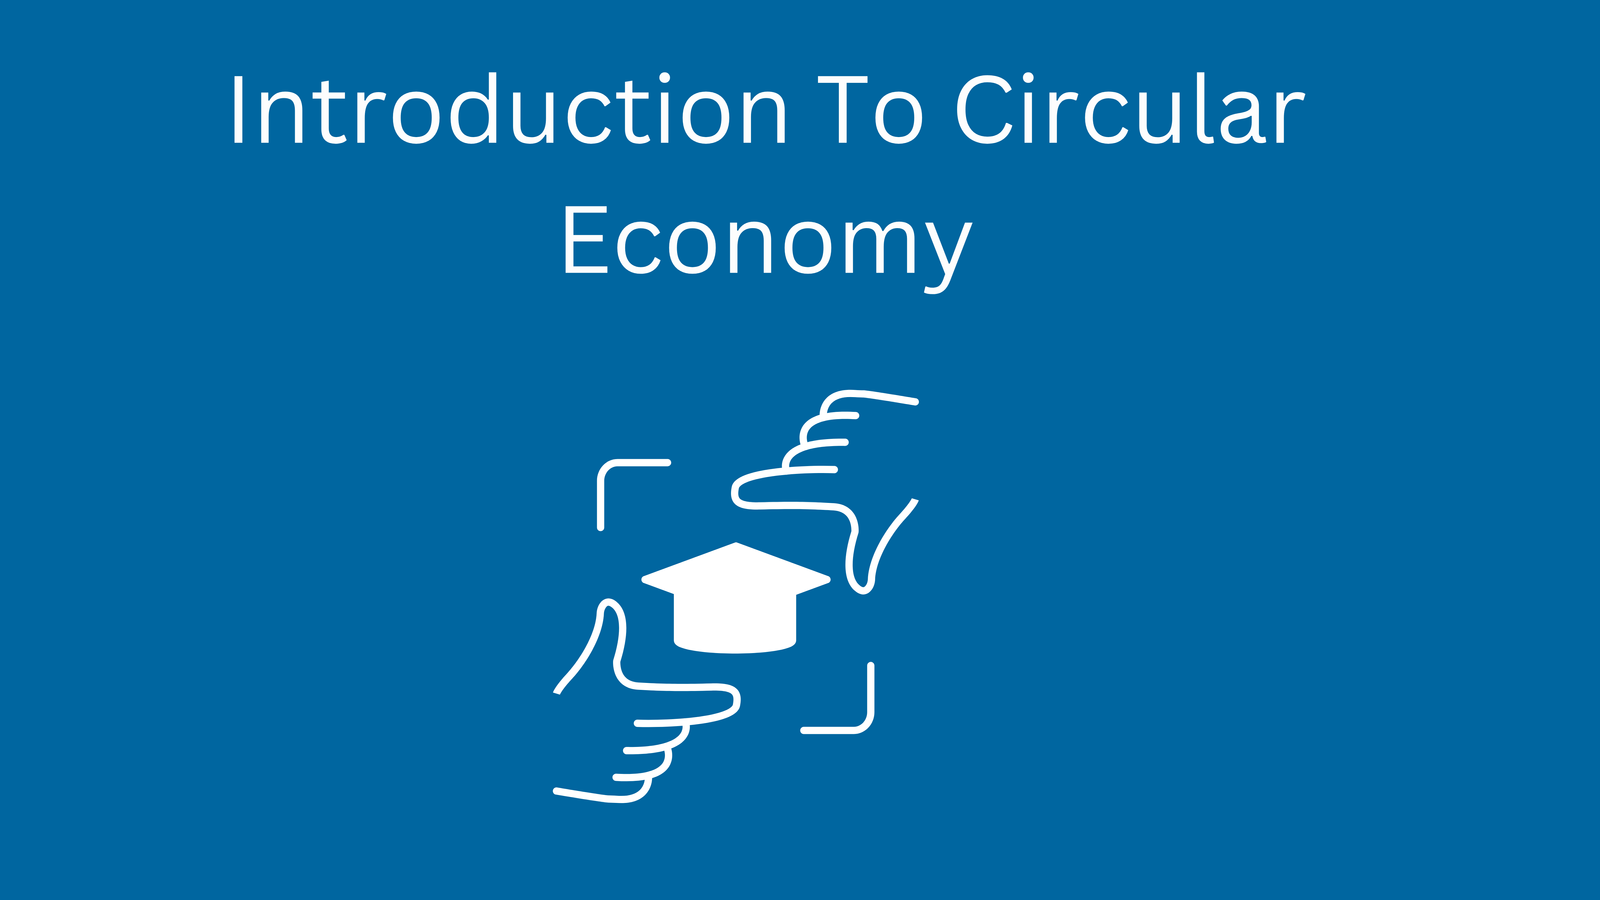 Introduction To Circular Economy